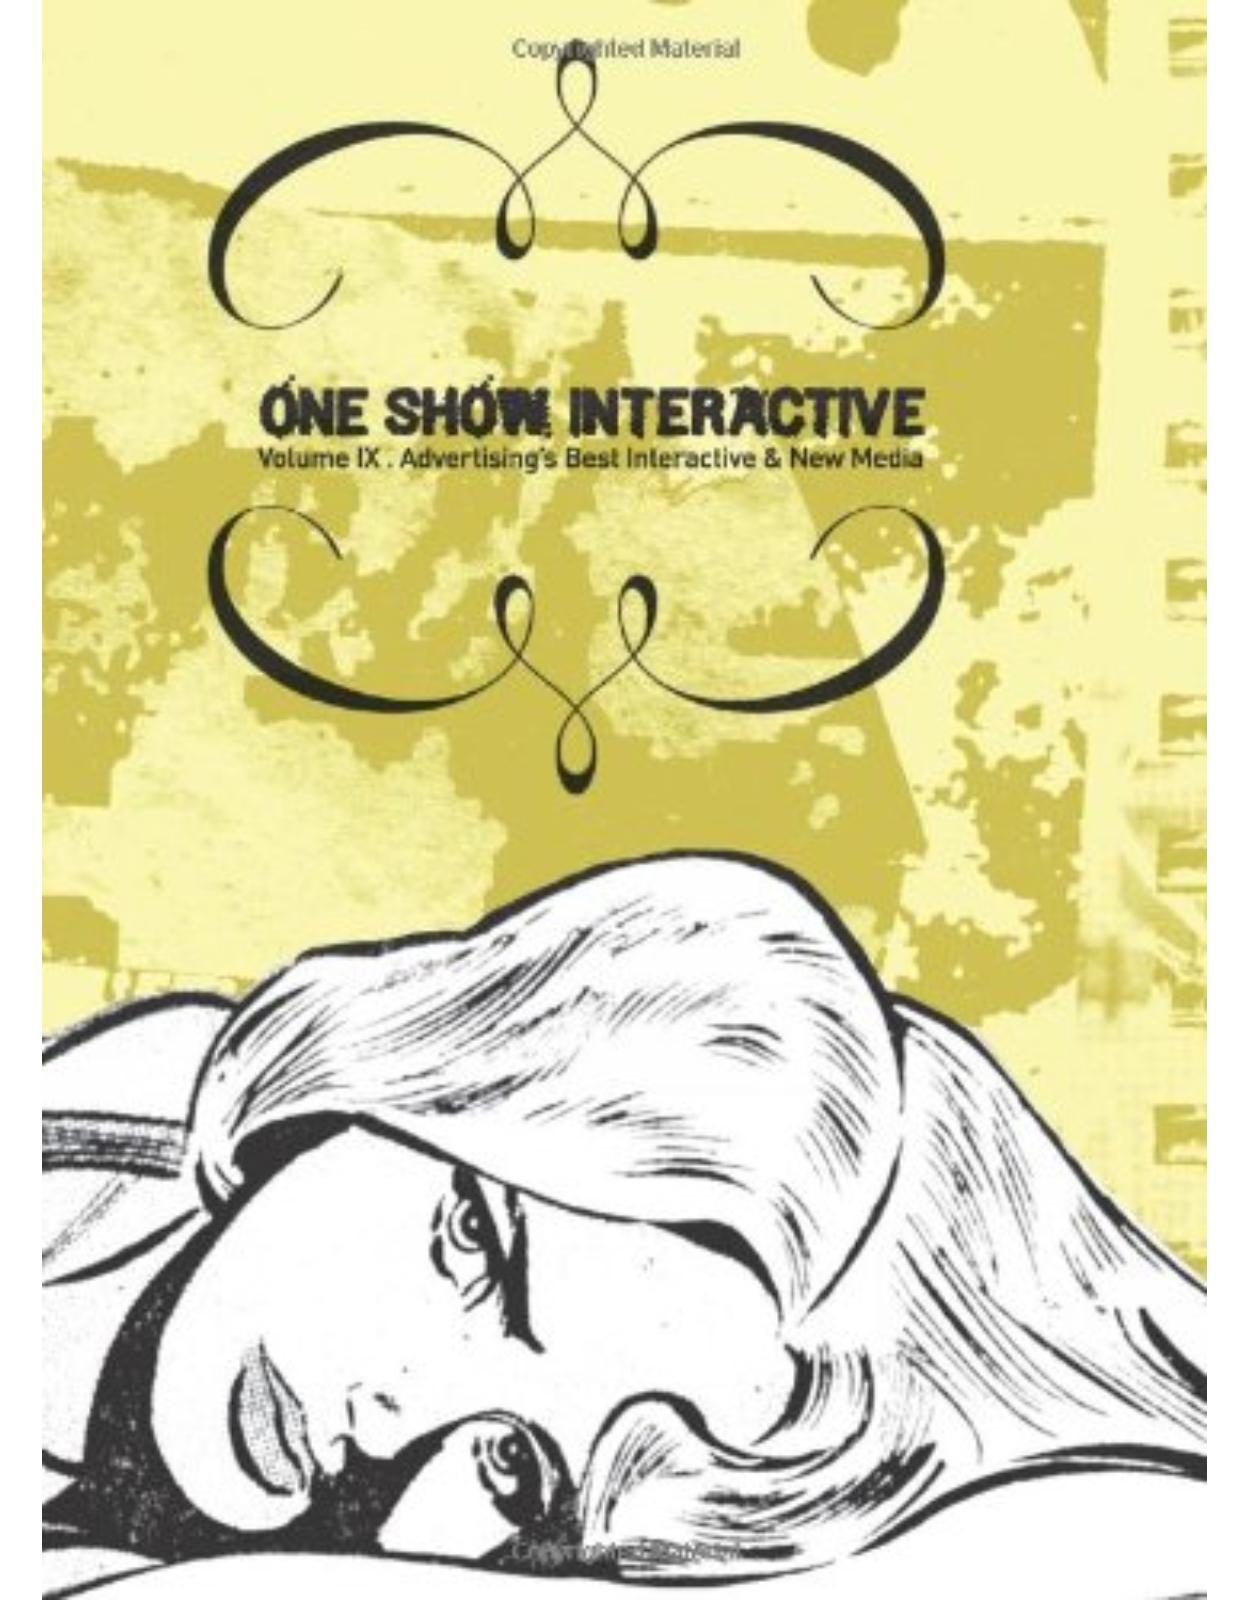 The One Show Interactive Volume IX